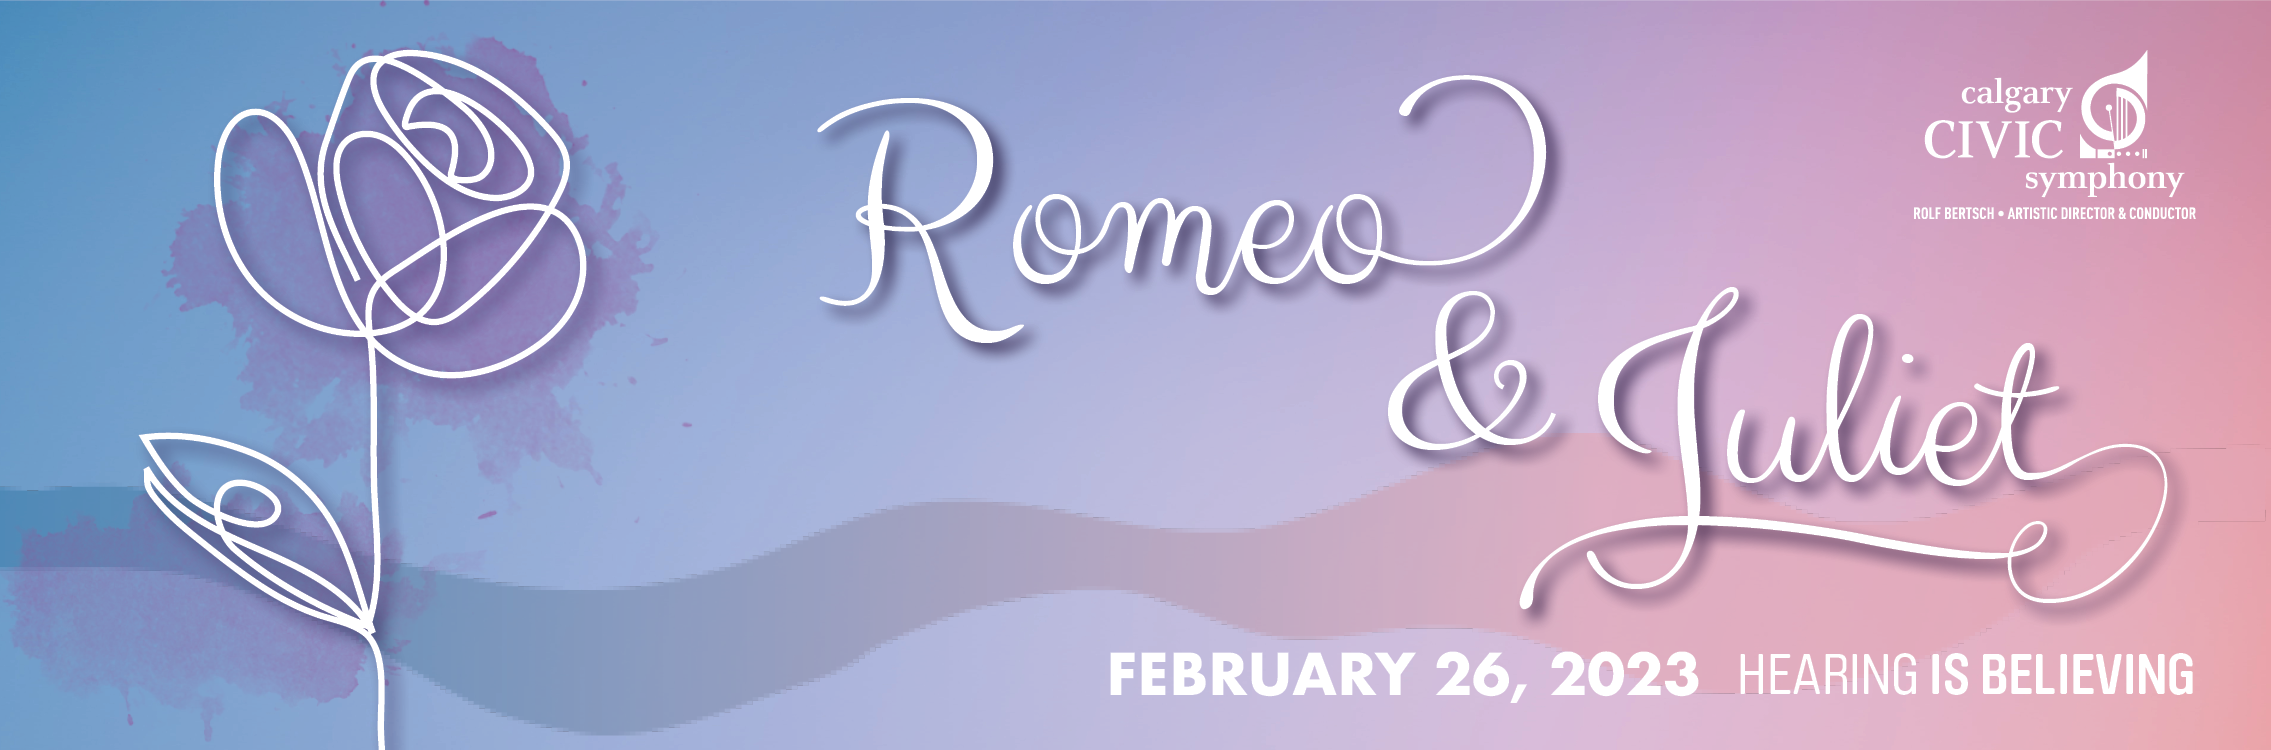 Romeo & Juliet Event Image